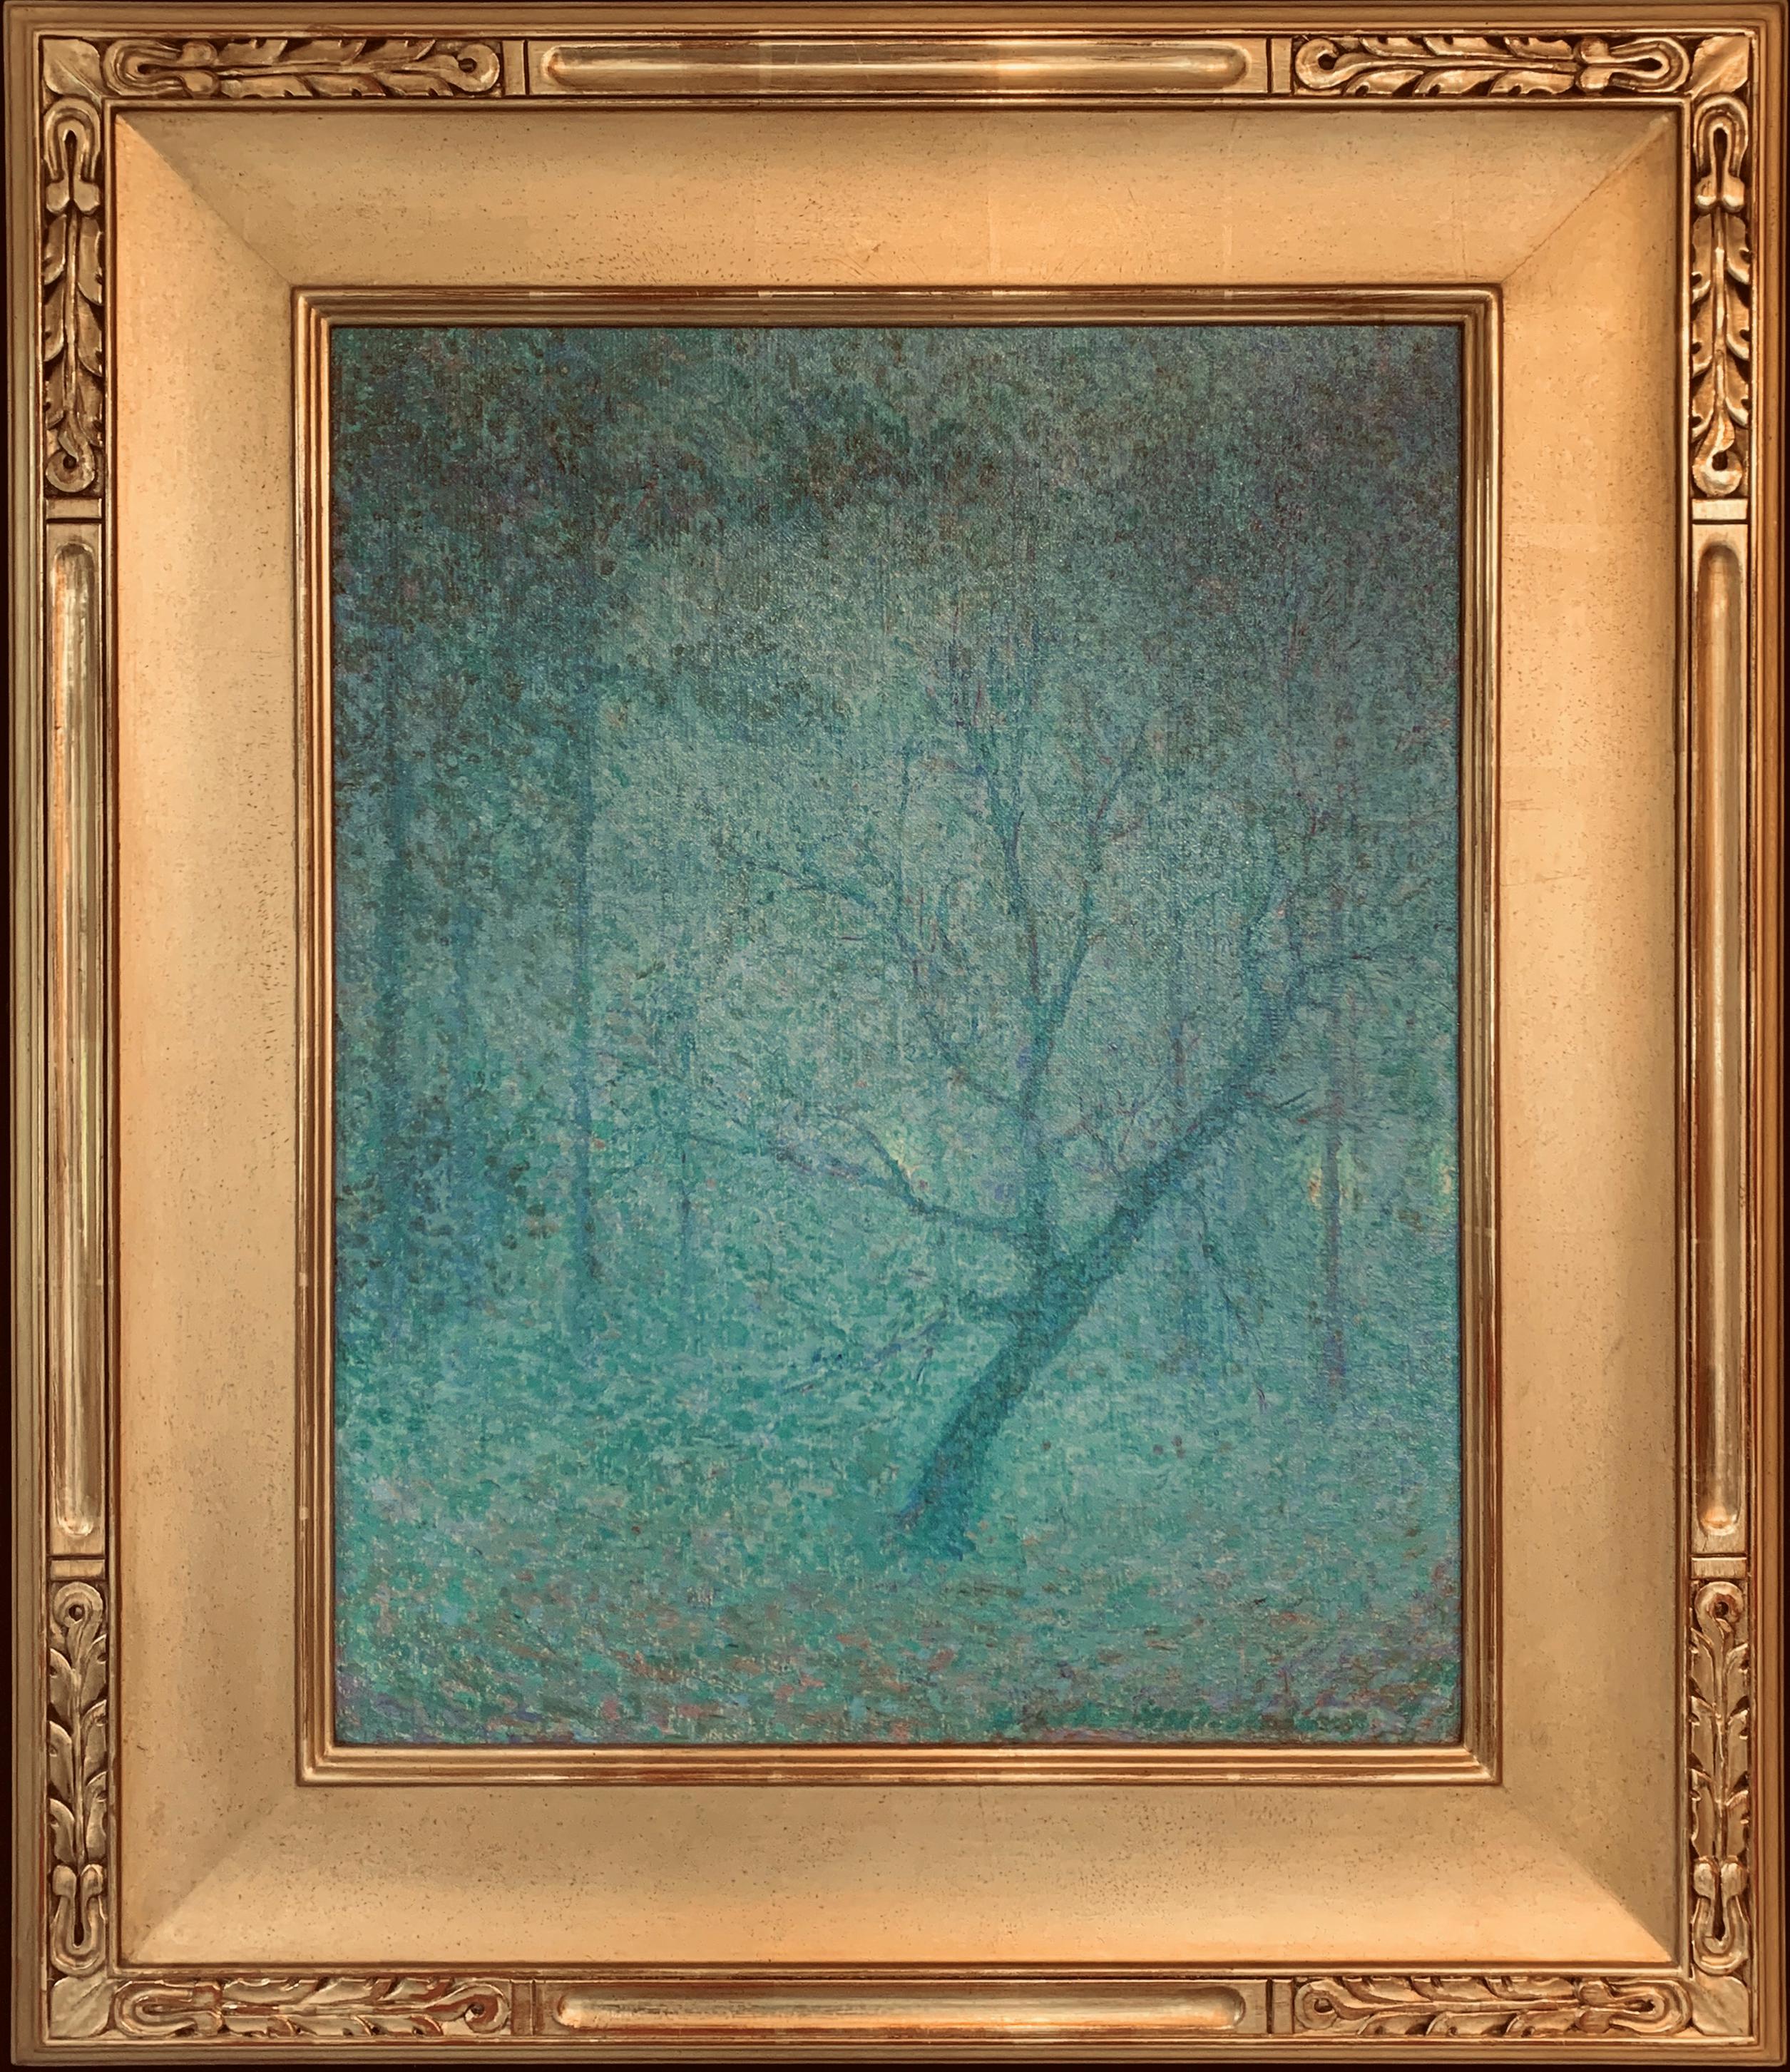 Wharton Esherick  Landscape Painting - Twilight, American Impressionist Landscape, 1920's, Oil on Canvas, Framed